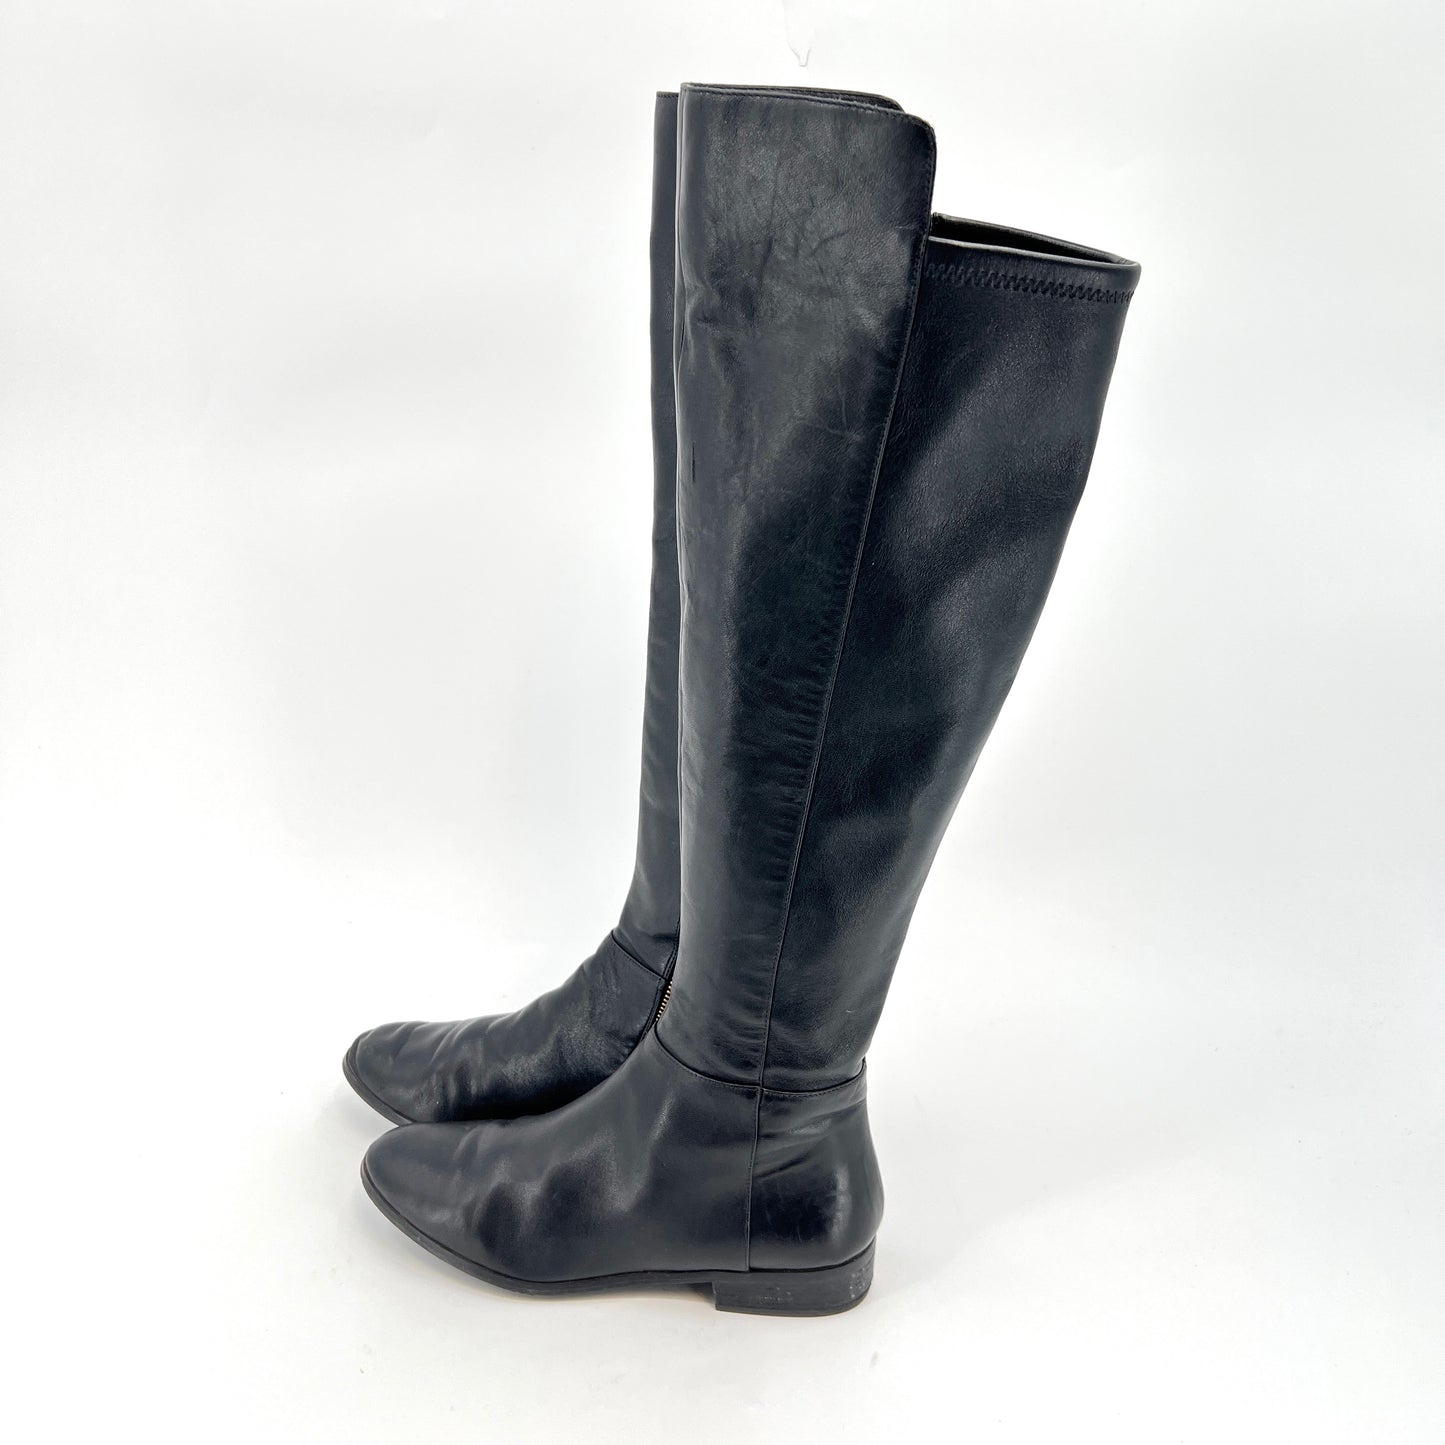 Sold shop Michael Kors  Leather Boots 7.5 US